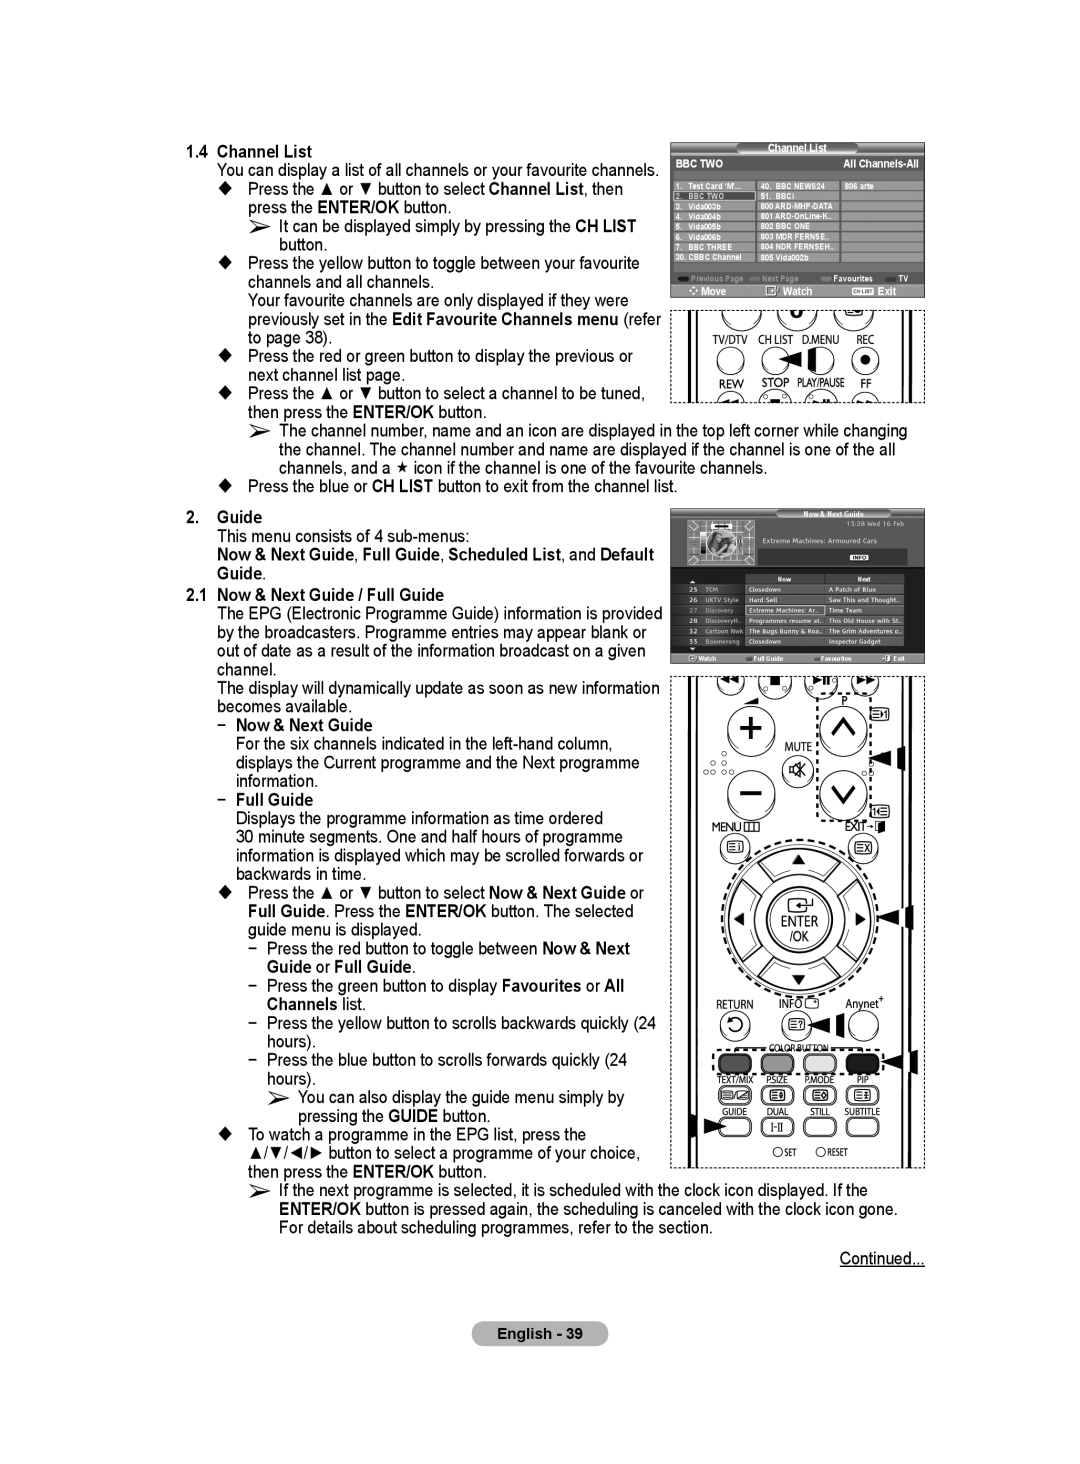 Samsung BN68-01171B-03 manual This menu consists of 4 sub-menus, 2.1Now & Next Guide / Full Guide 